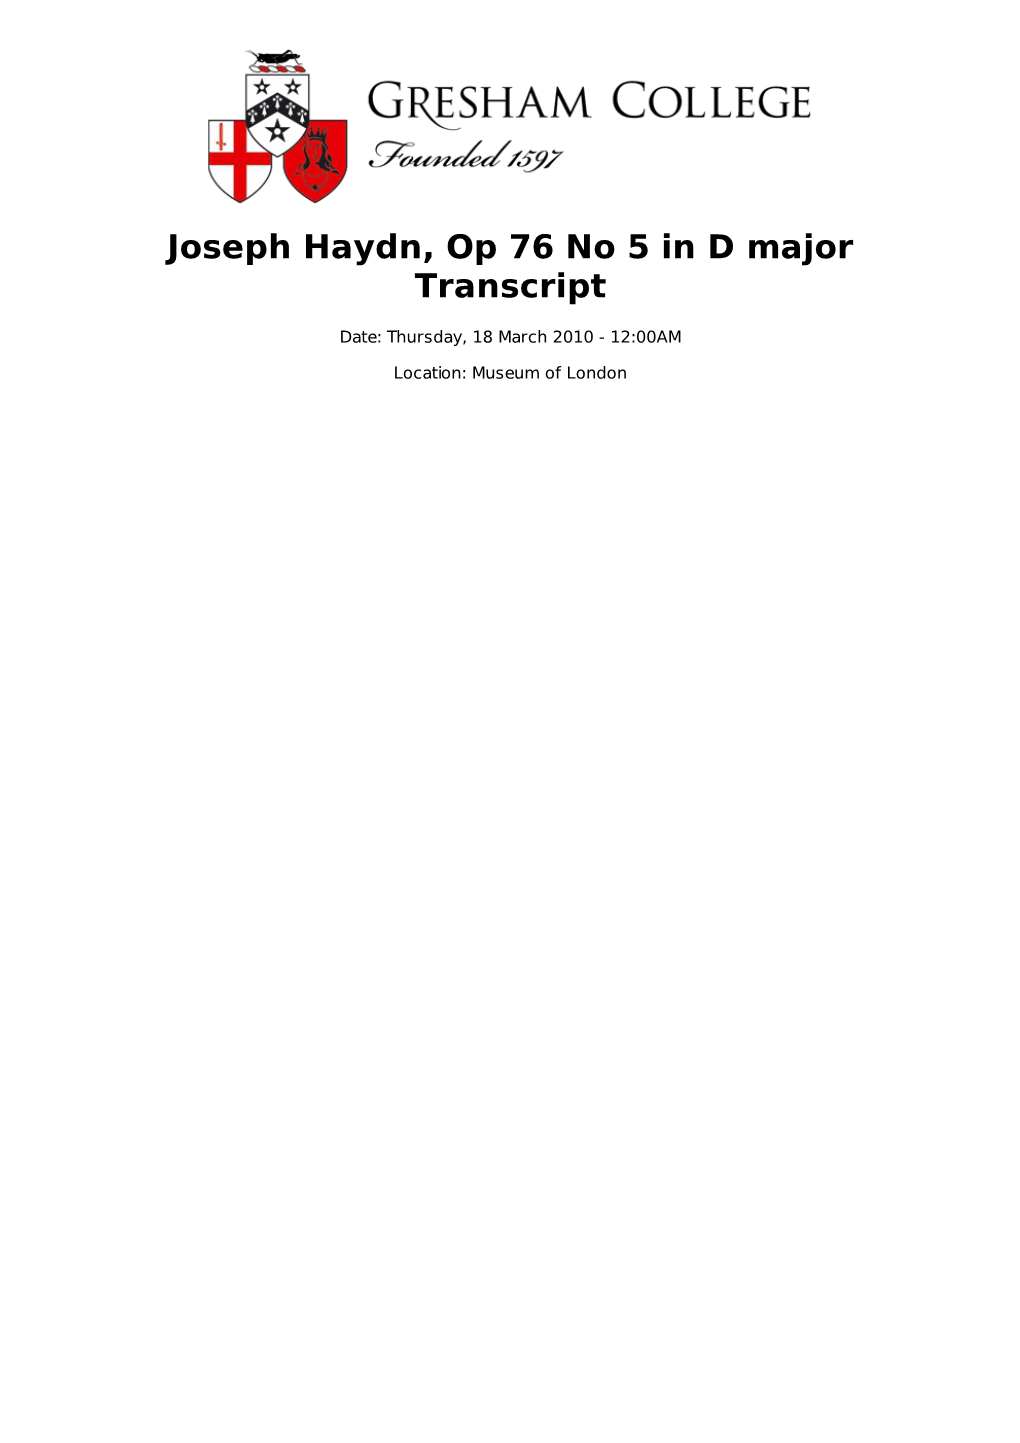 Joseph Haydn, Op 76 No 5 in D Major Transcript